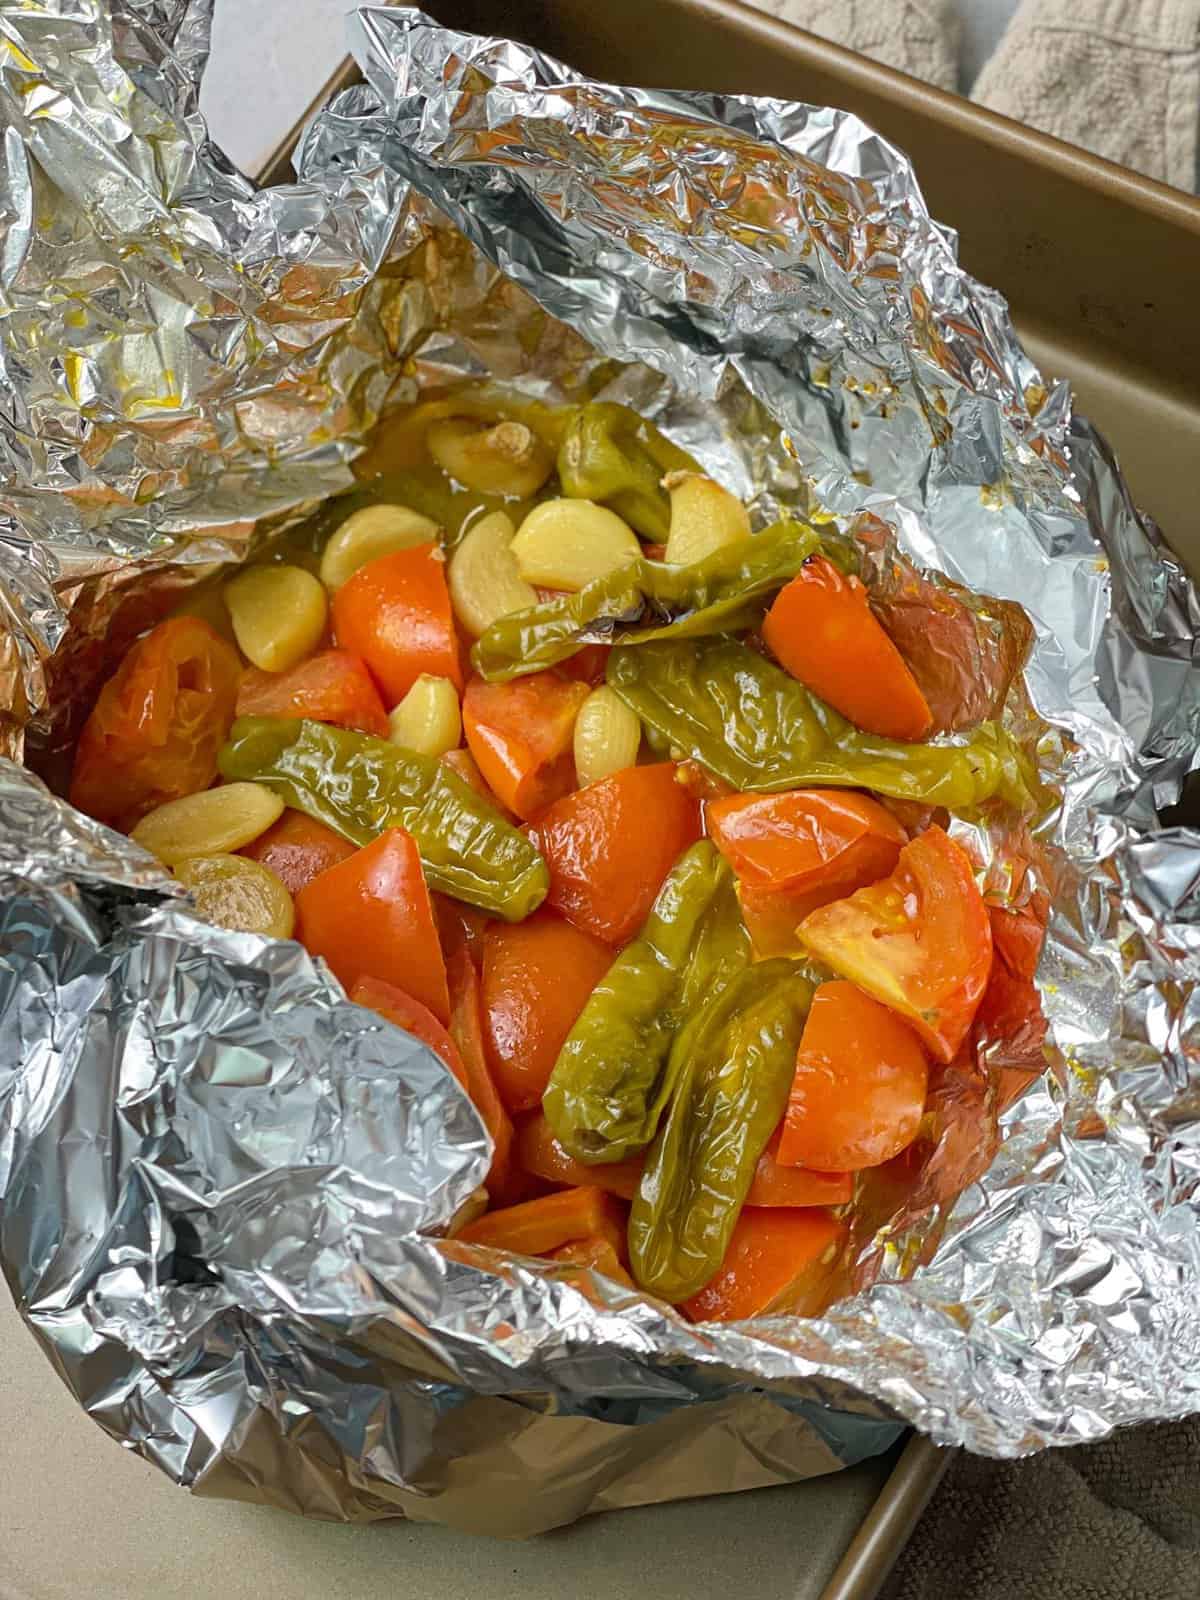 Roasted fresh vegetables in an aluminum foil.